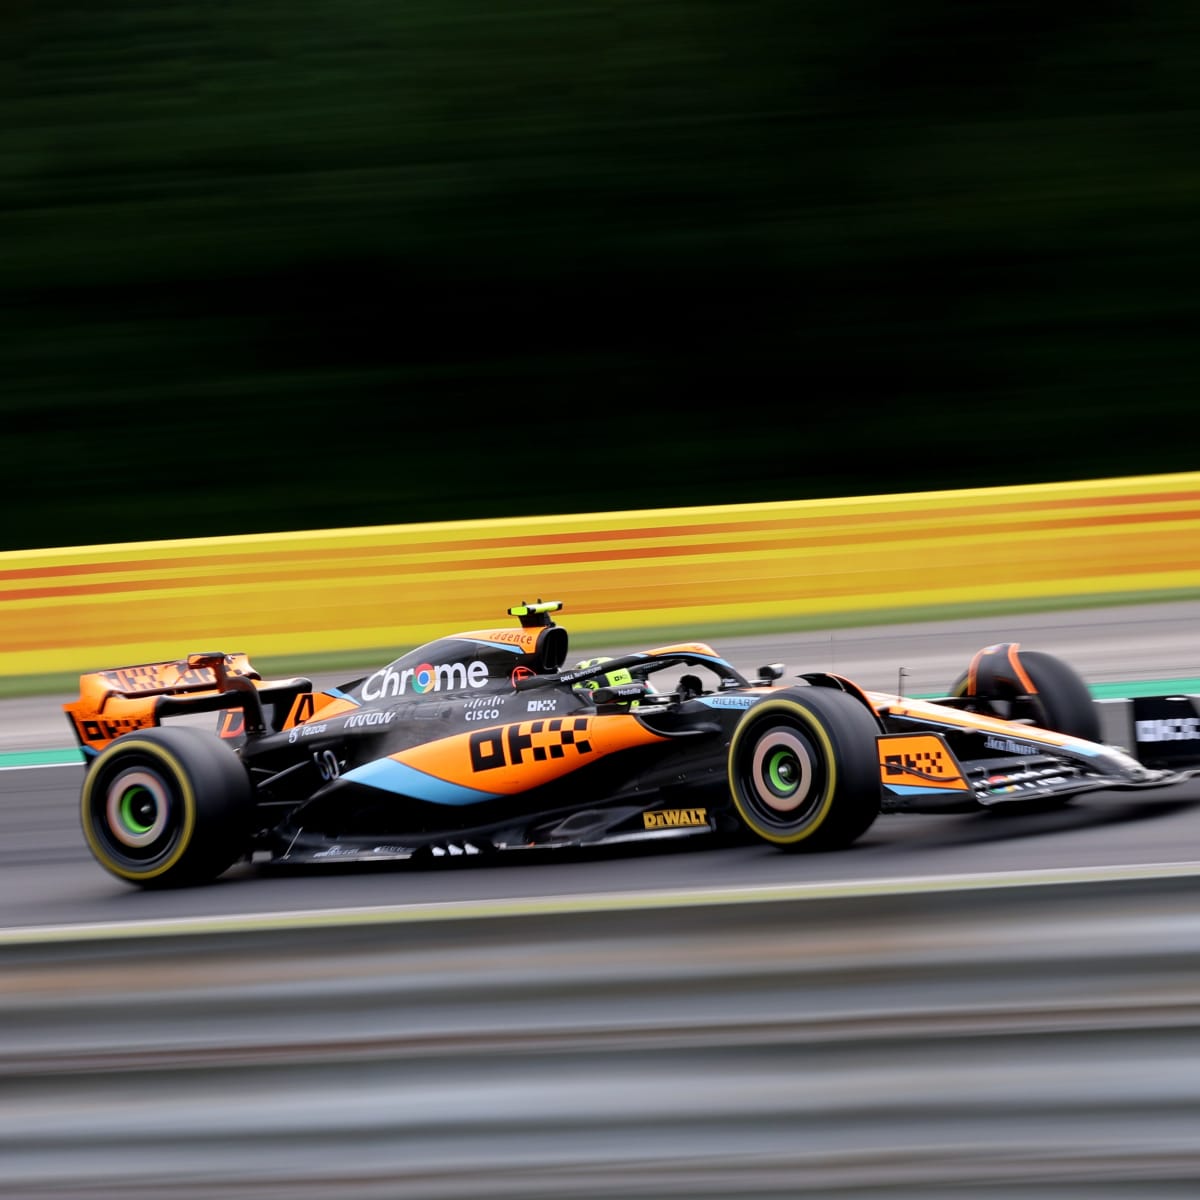 OKX's Partner McLaren F1 Team Unveil Car for 2023 Formula 1 Season